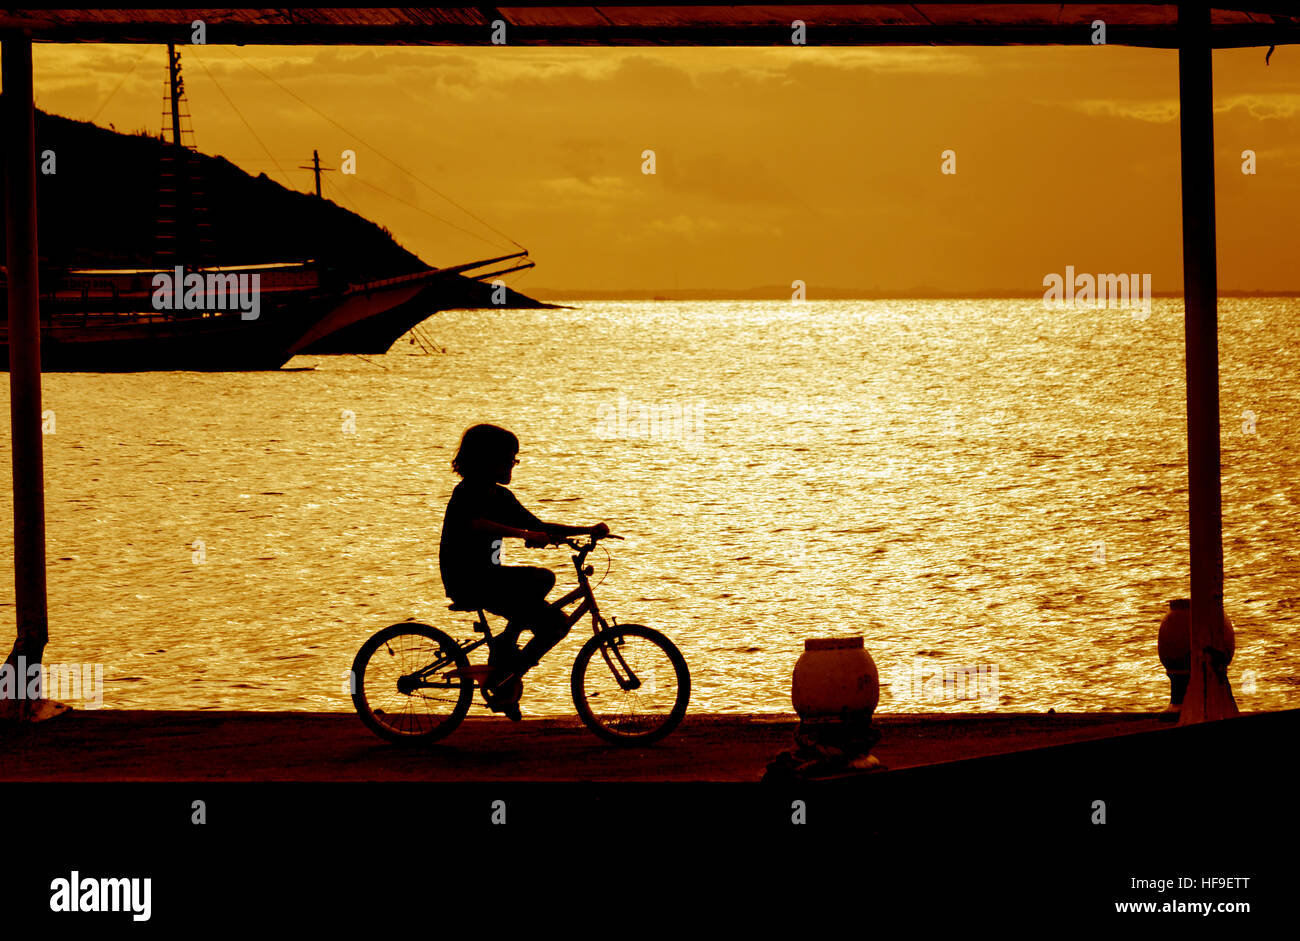 Boy on bike over harbor at sunset Stock Photo